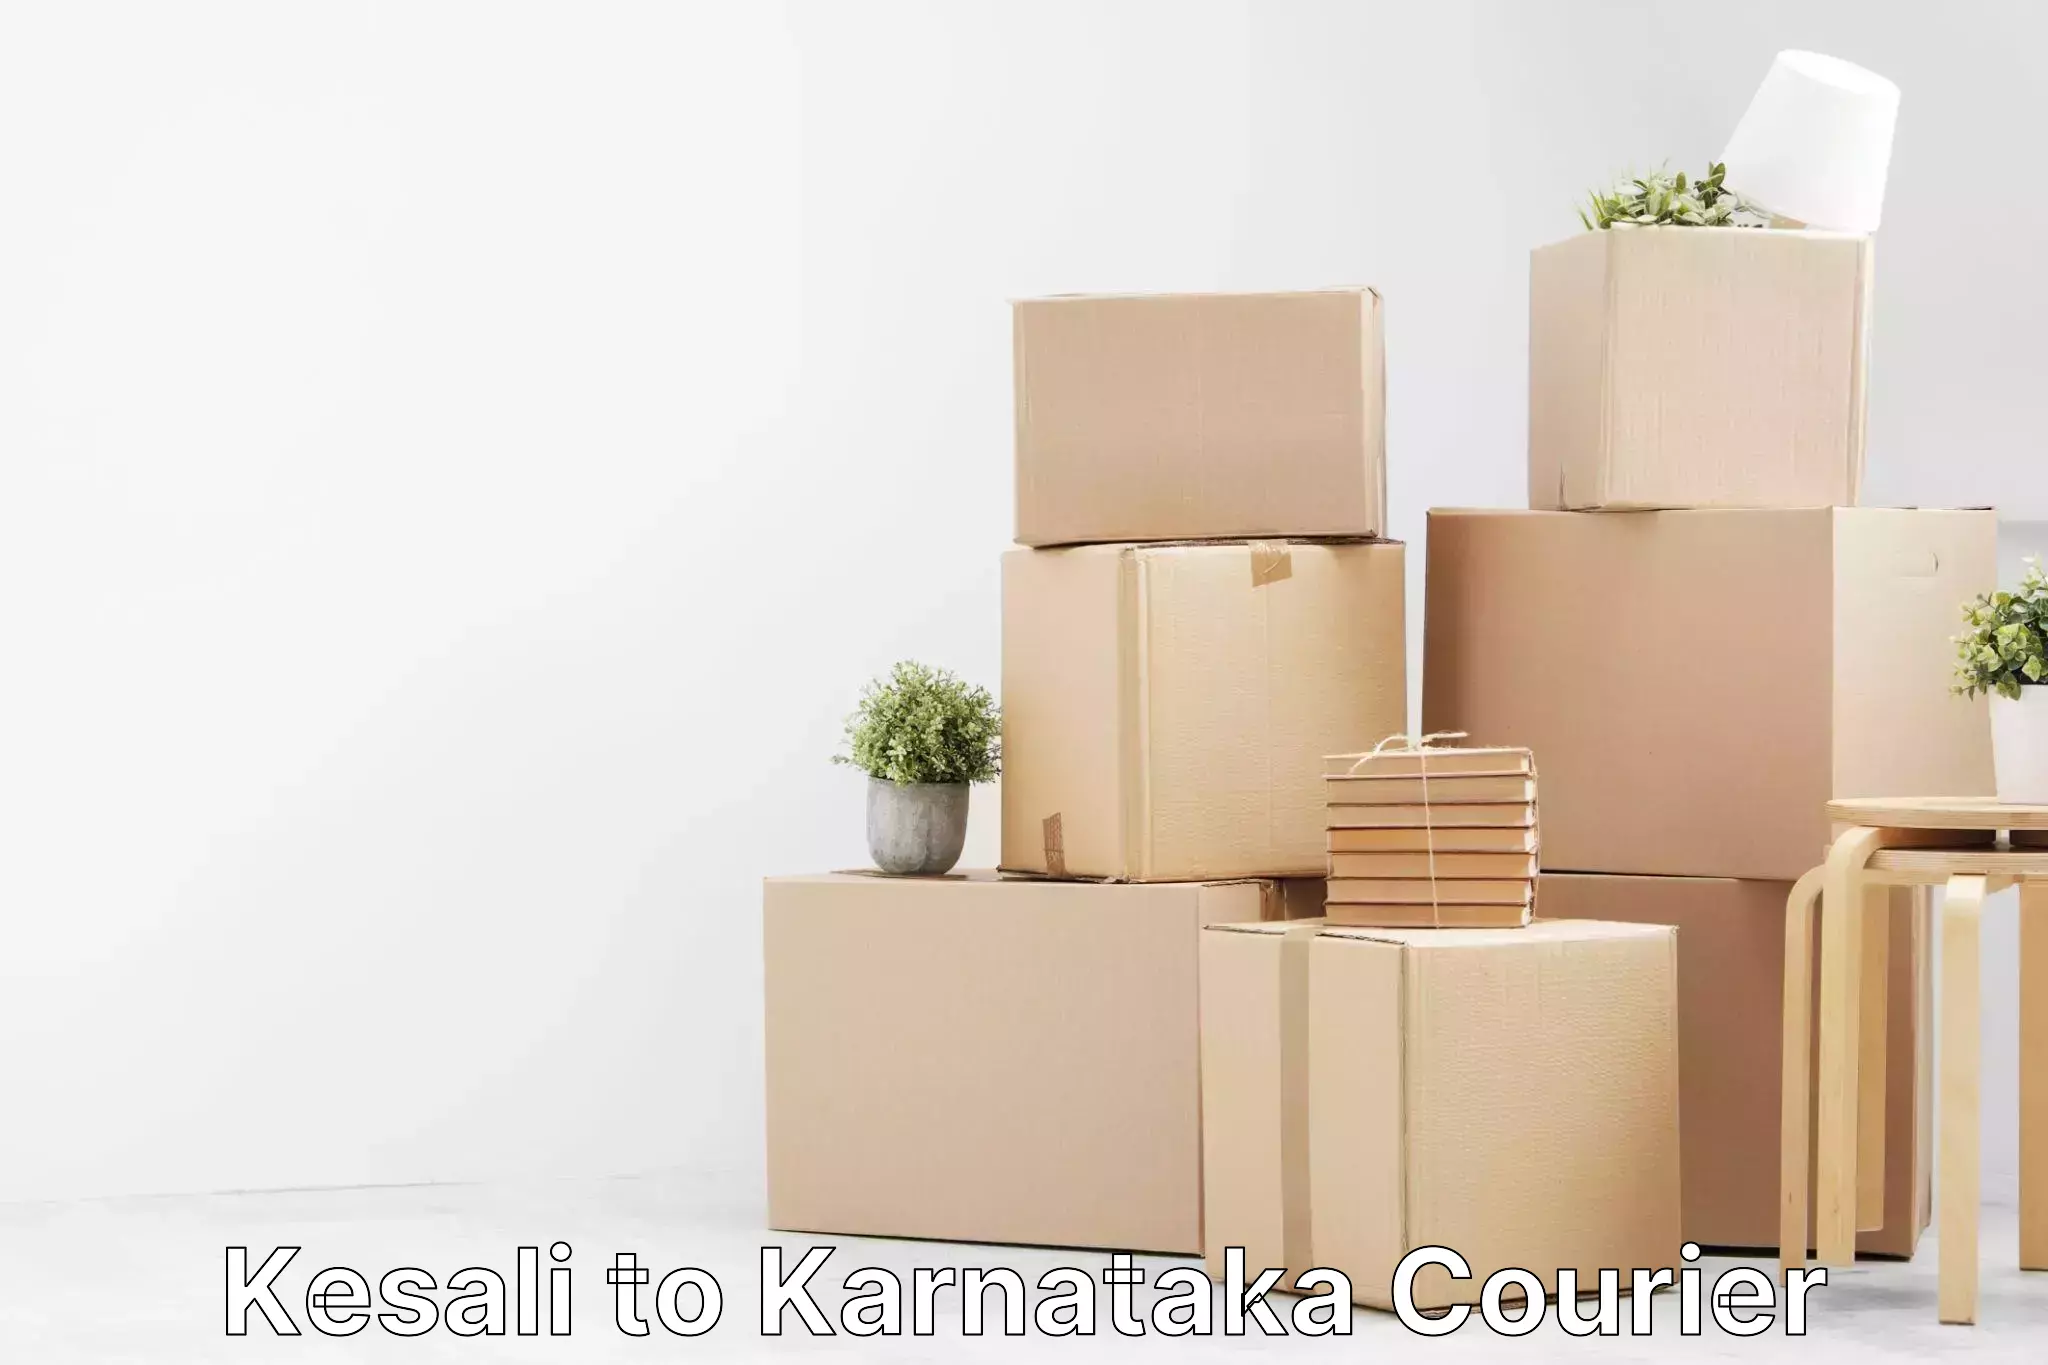 Nationwide courier service Kesali to Karnataka